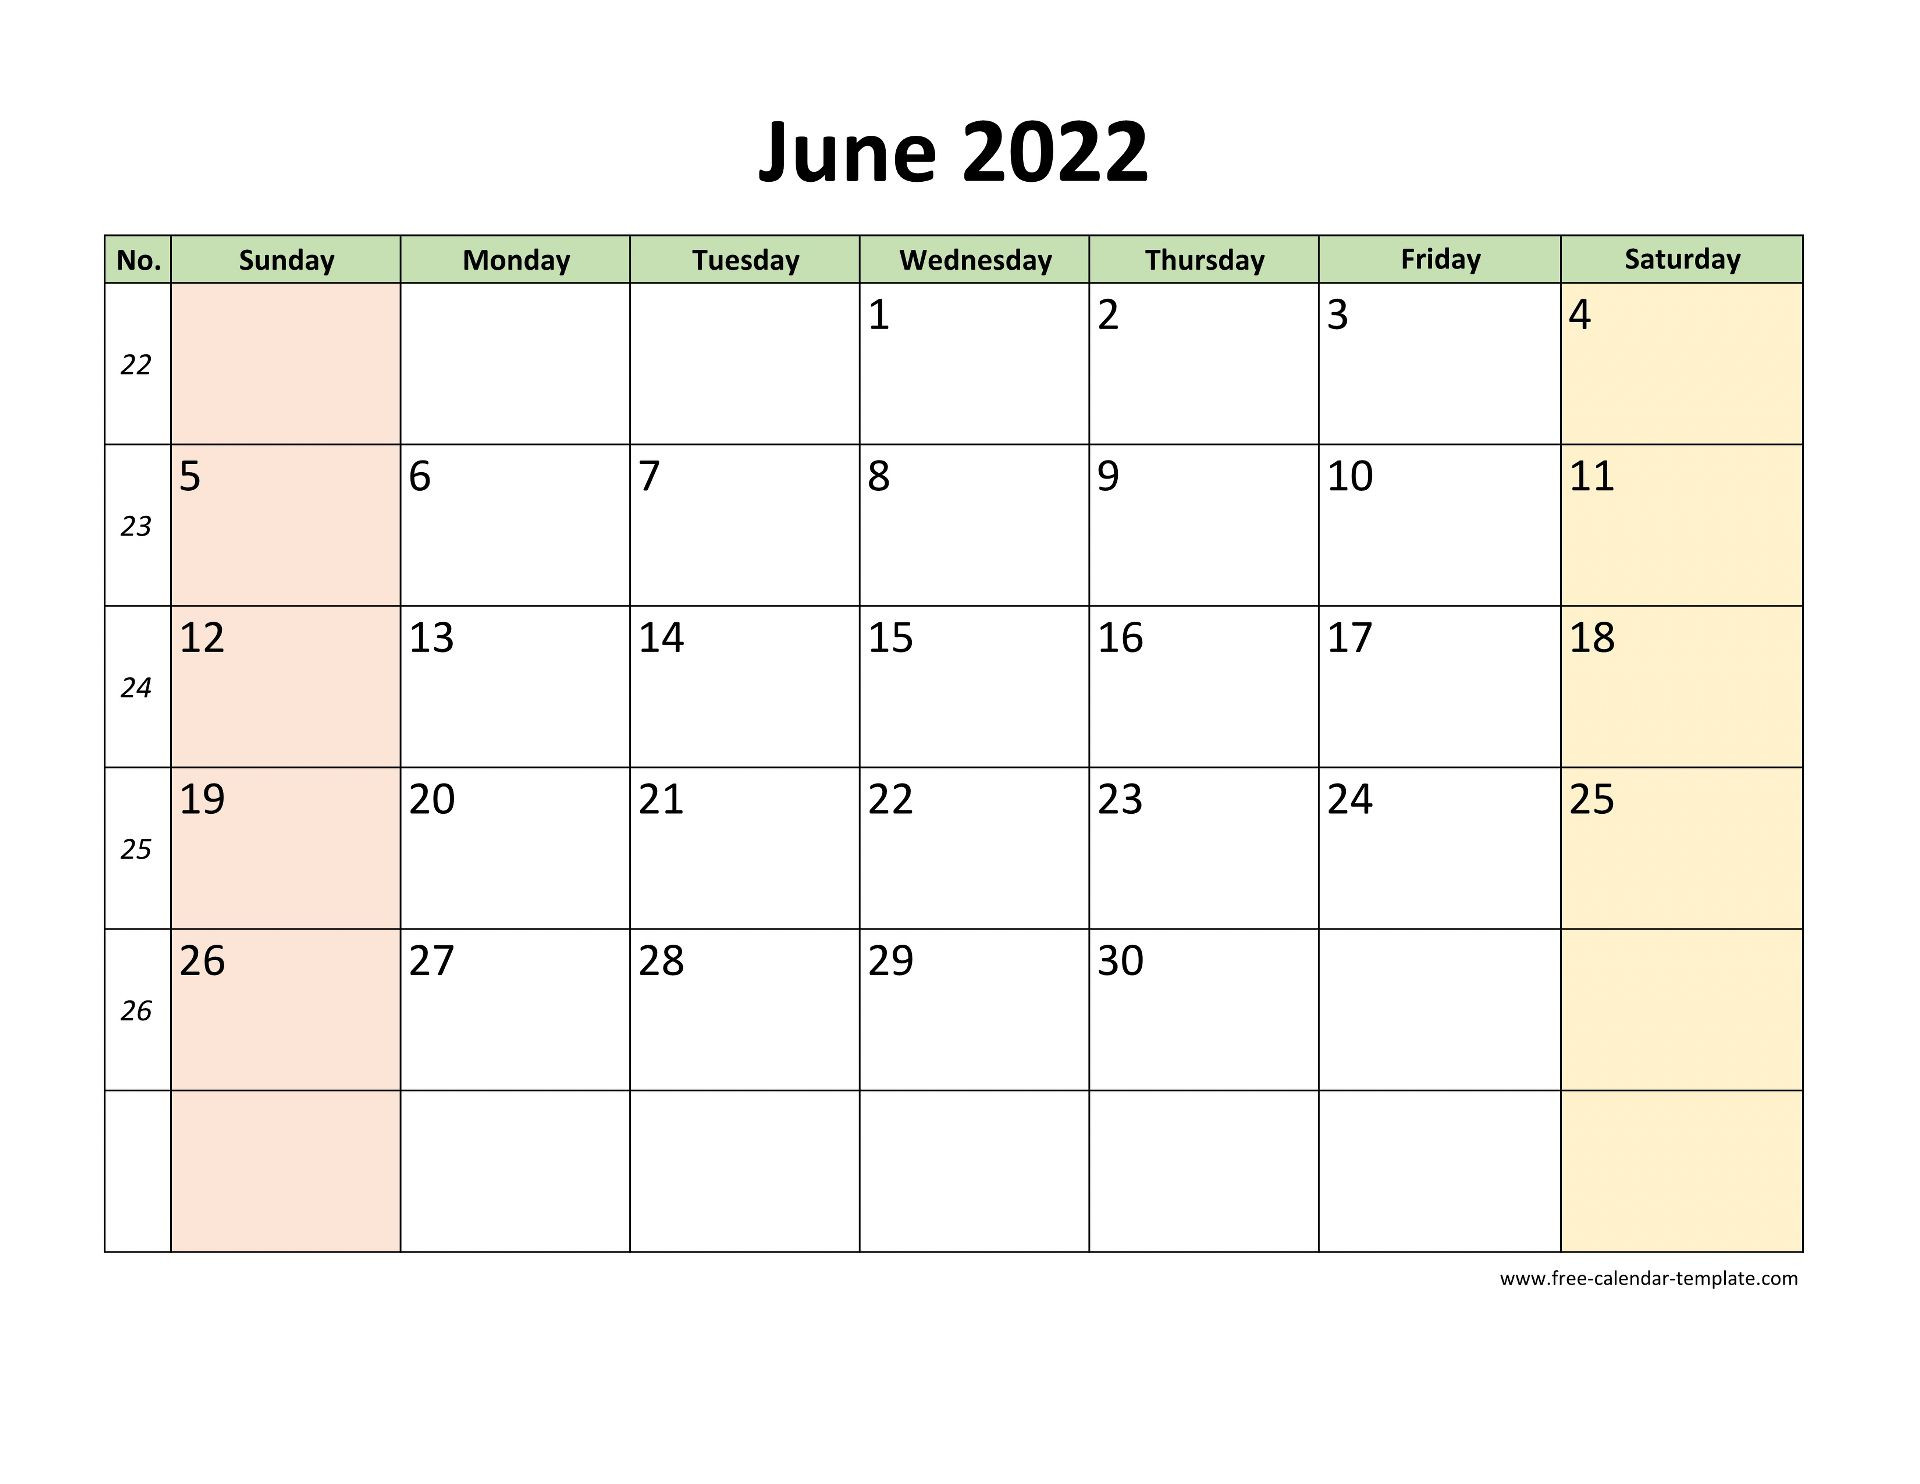 June 2022 Free Calendar Tempplate | Free-Calendar-Template  Calendar 2022 January To June